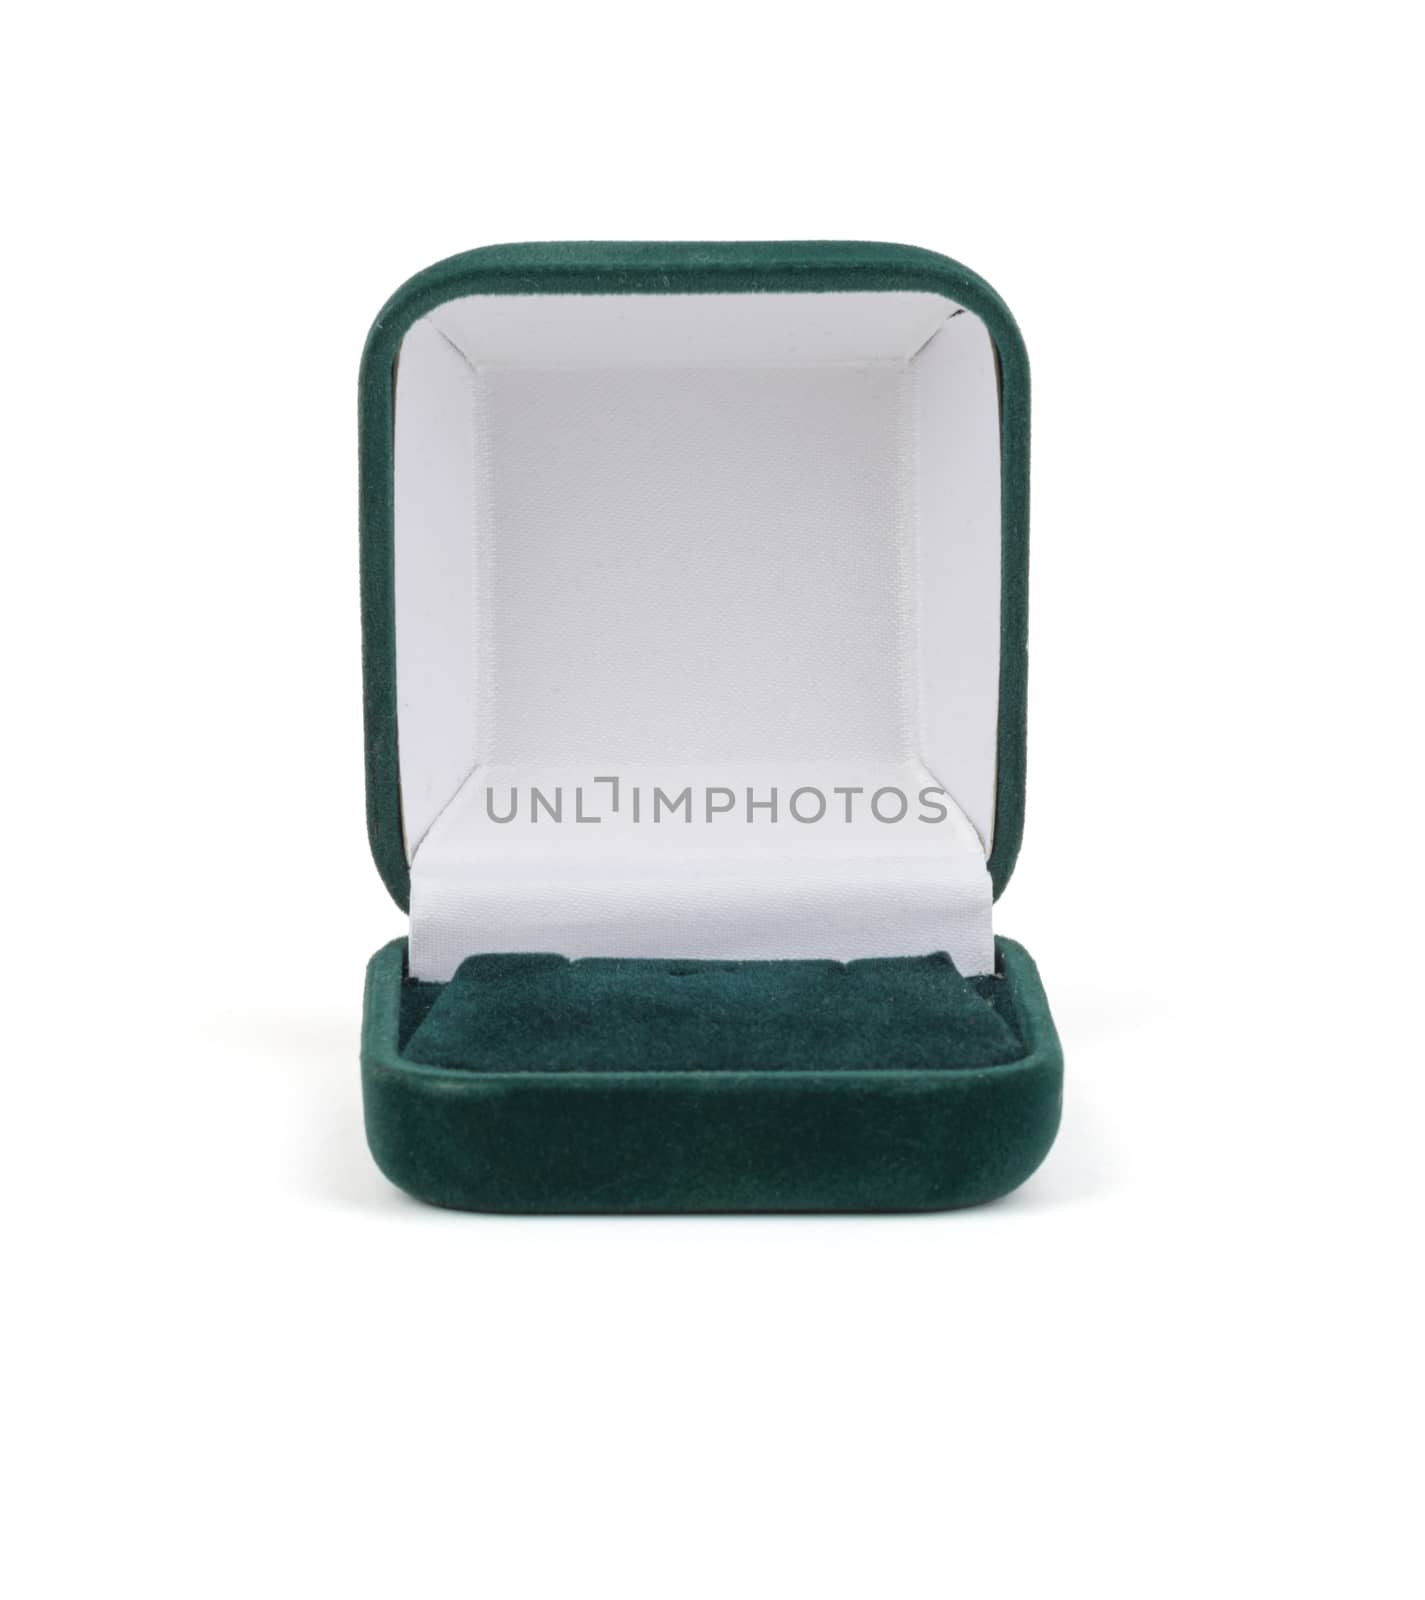 Empty ring box on isolated white background